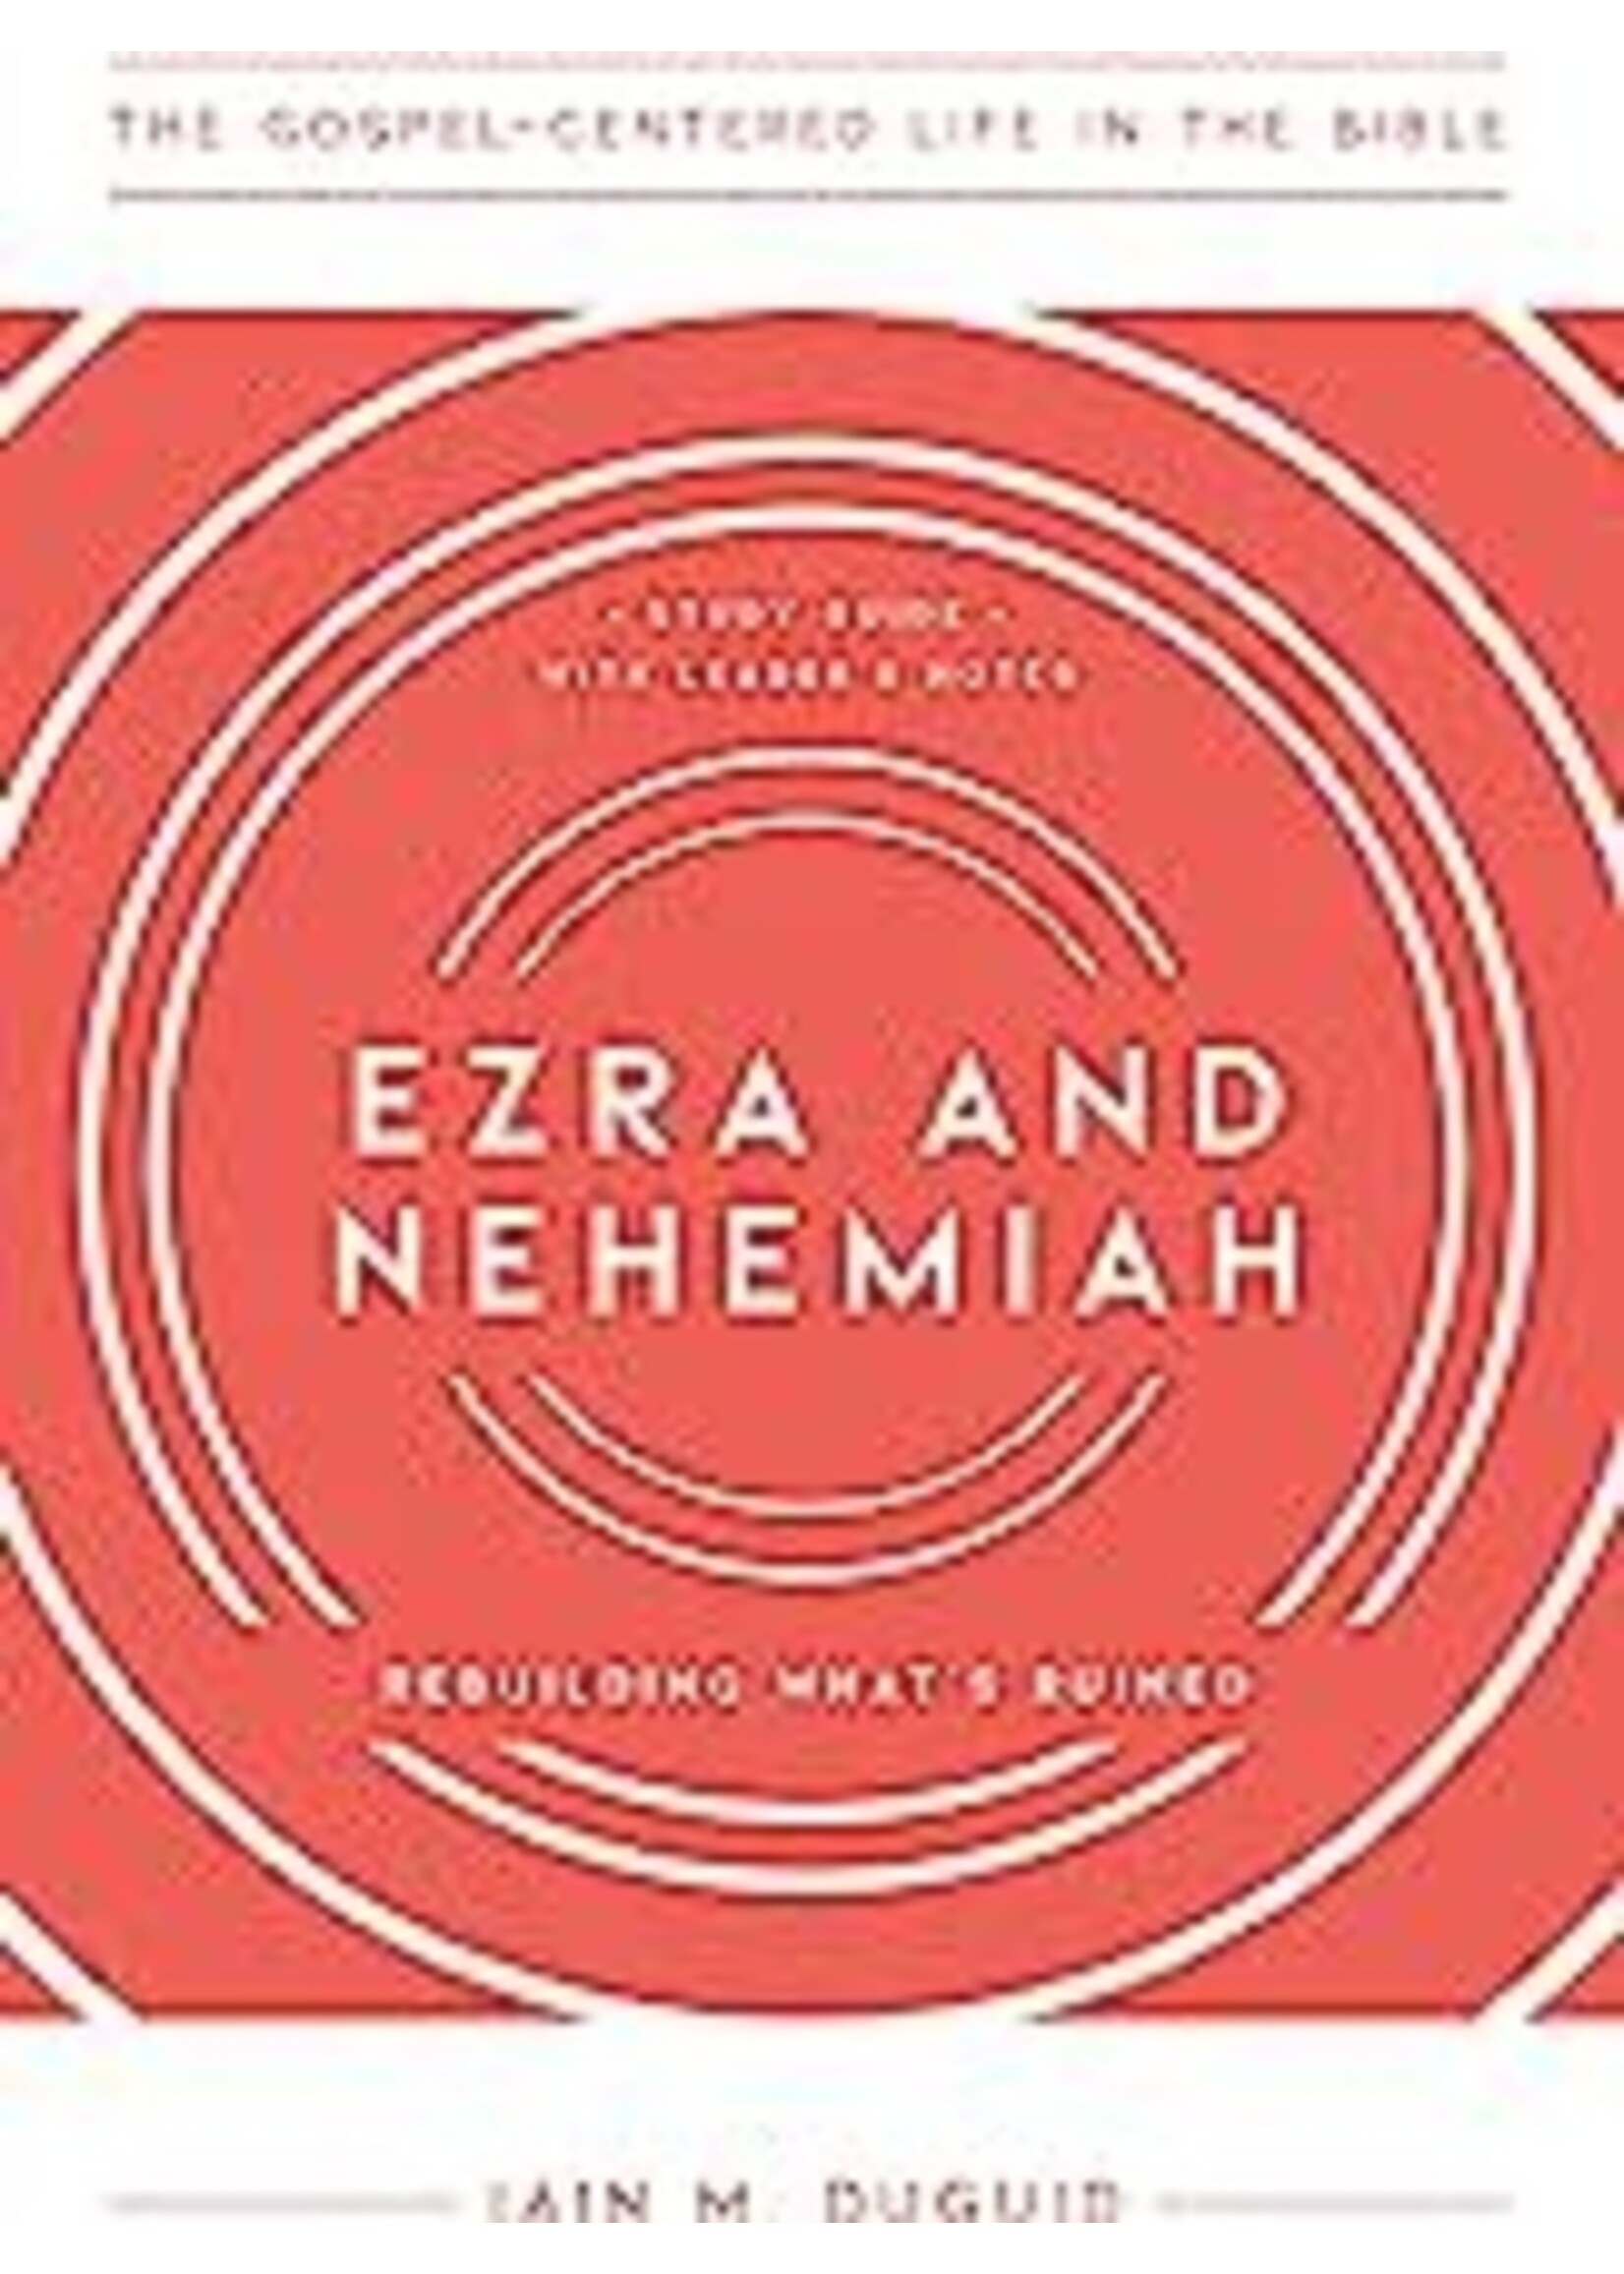 EZRA AND NEHEMIAH STUDY GUIDE WITH